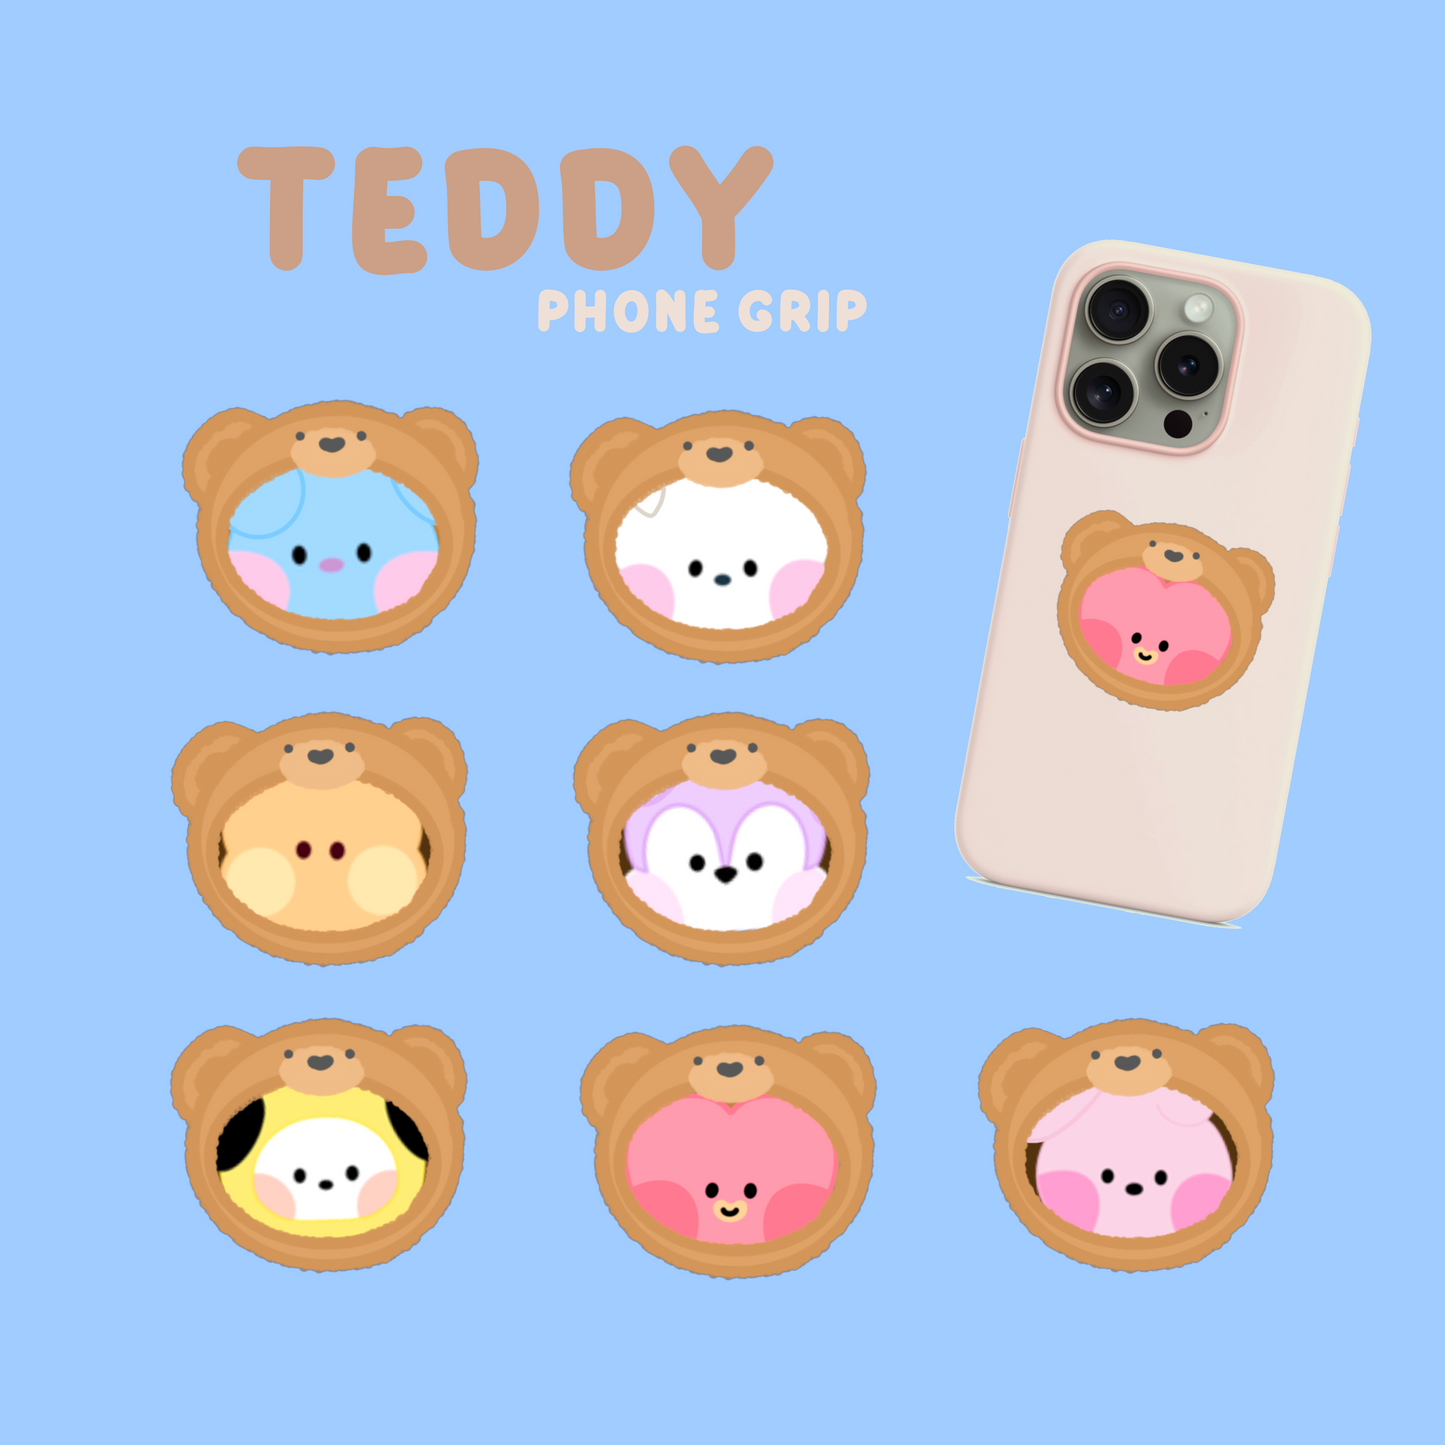 Teddy phone grip